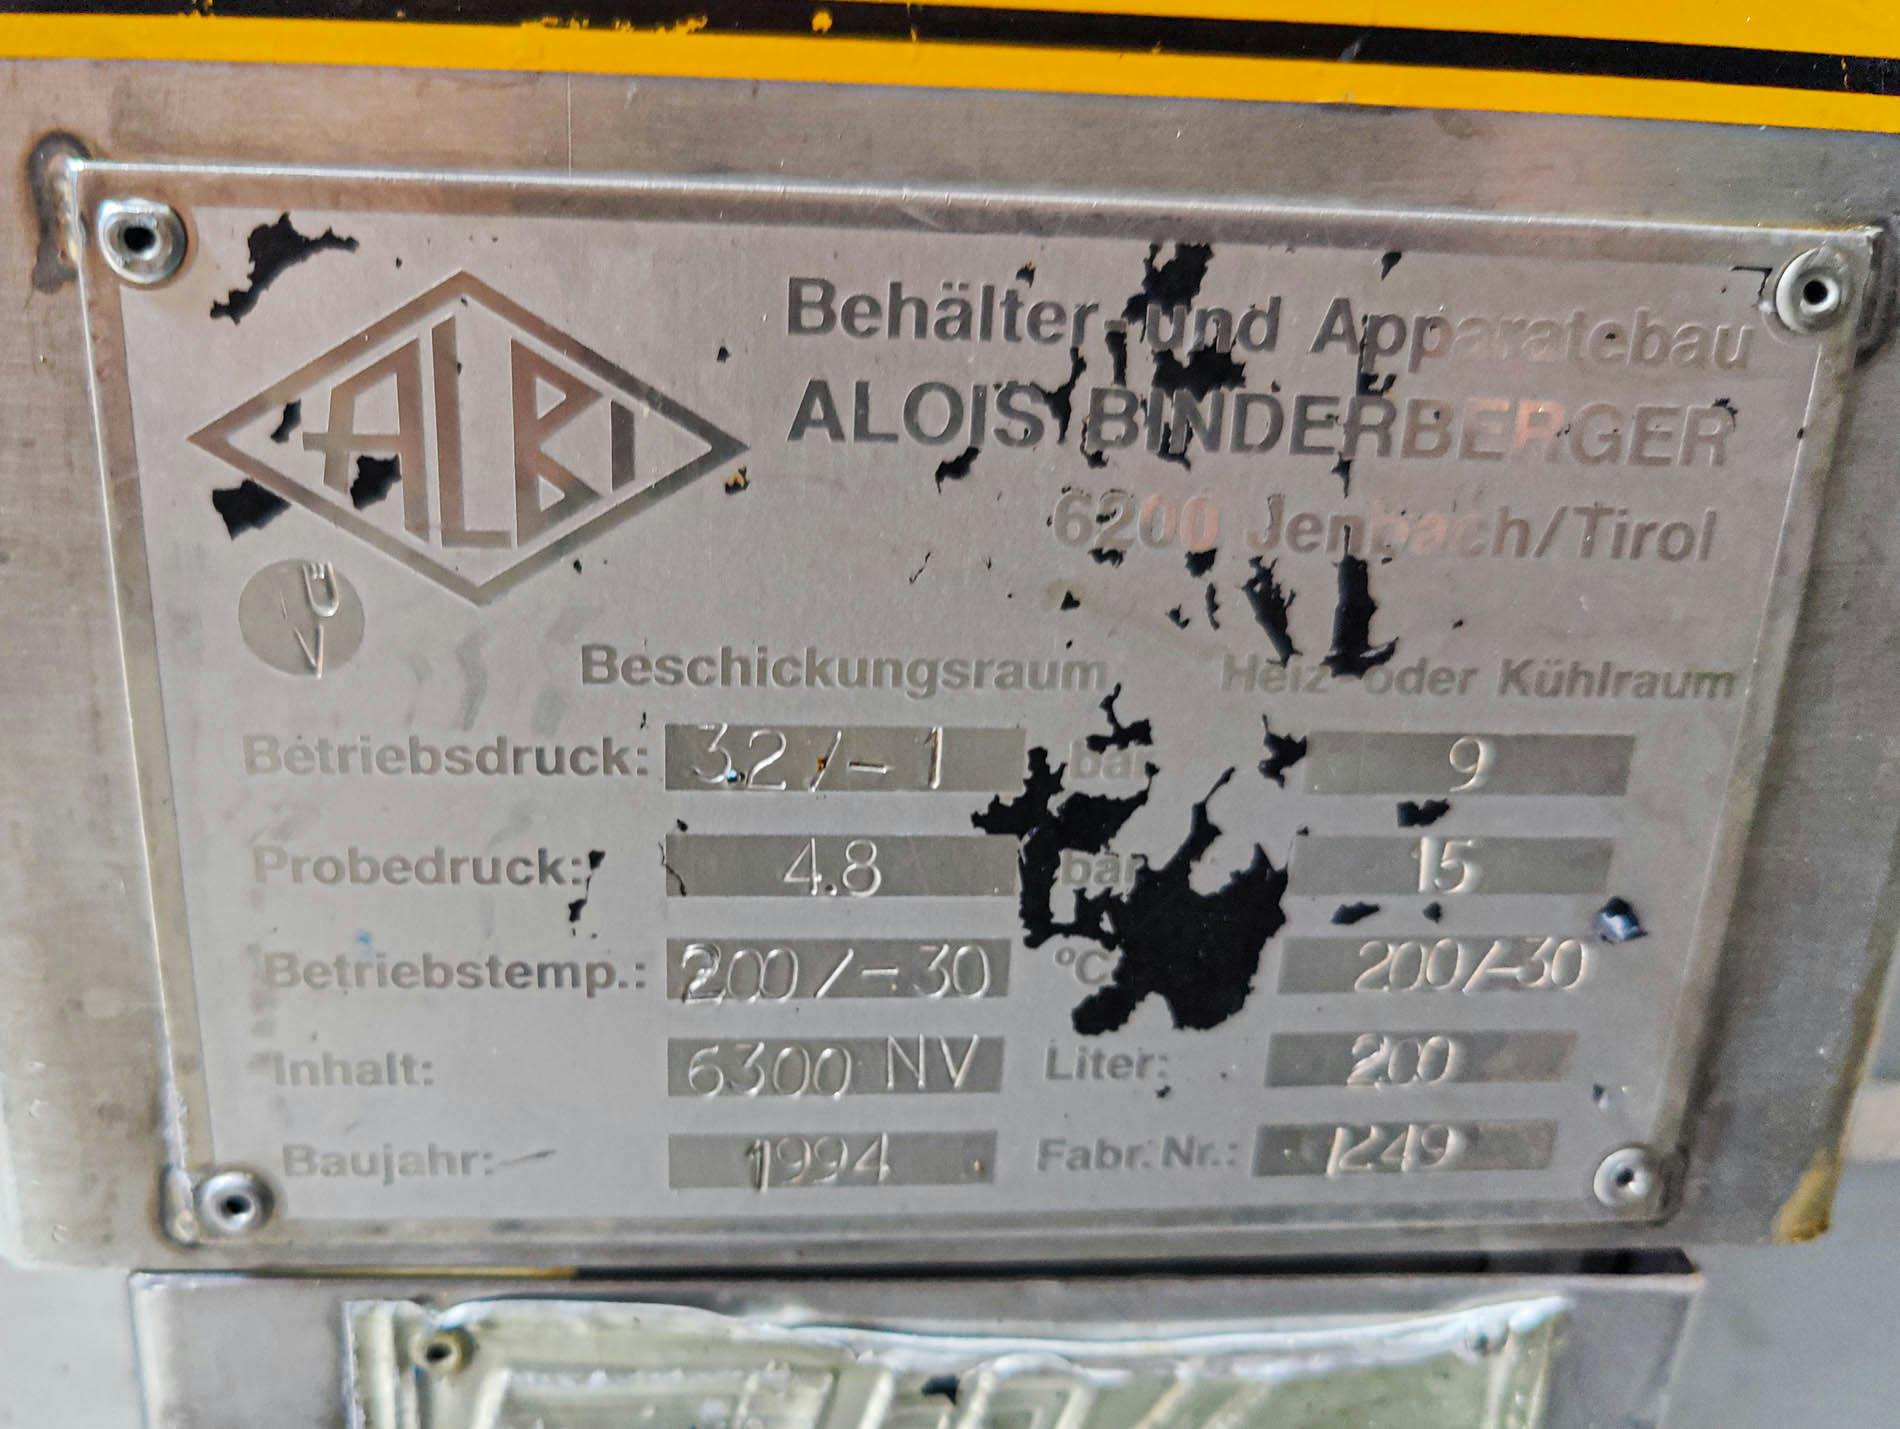 Albi Alois Binderberger 6300 Ltr - Stainless Steel Reactor - image 13